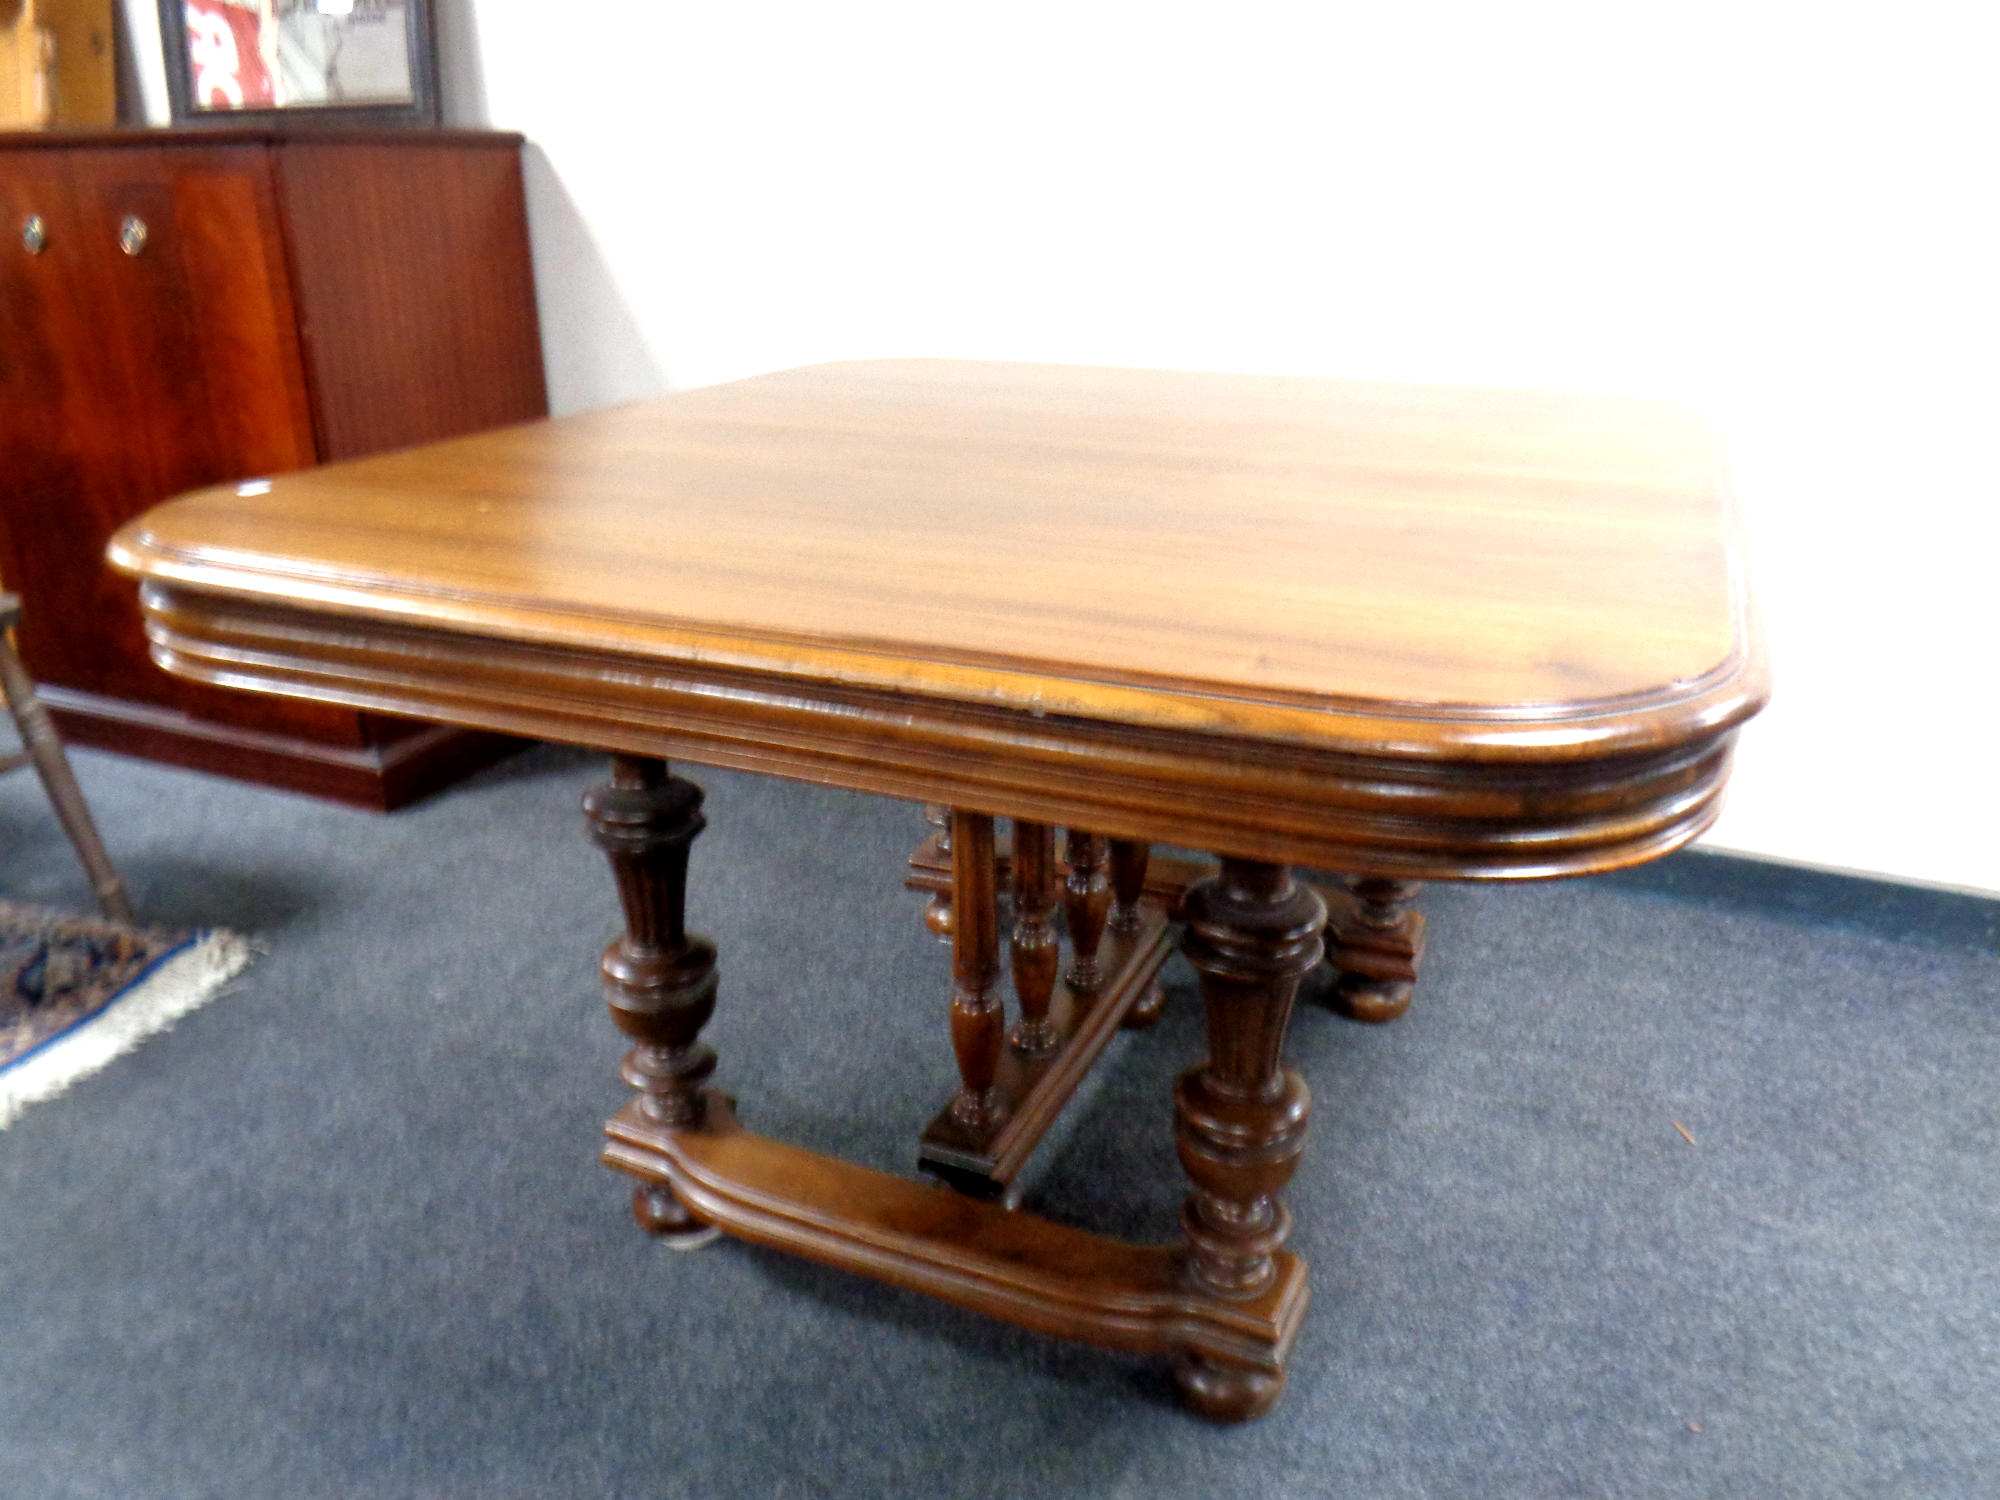 A 19th century mahogany pedestal dining table